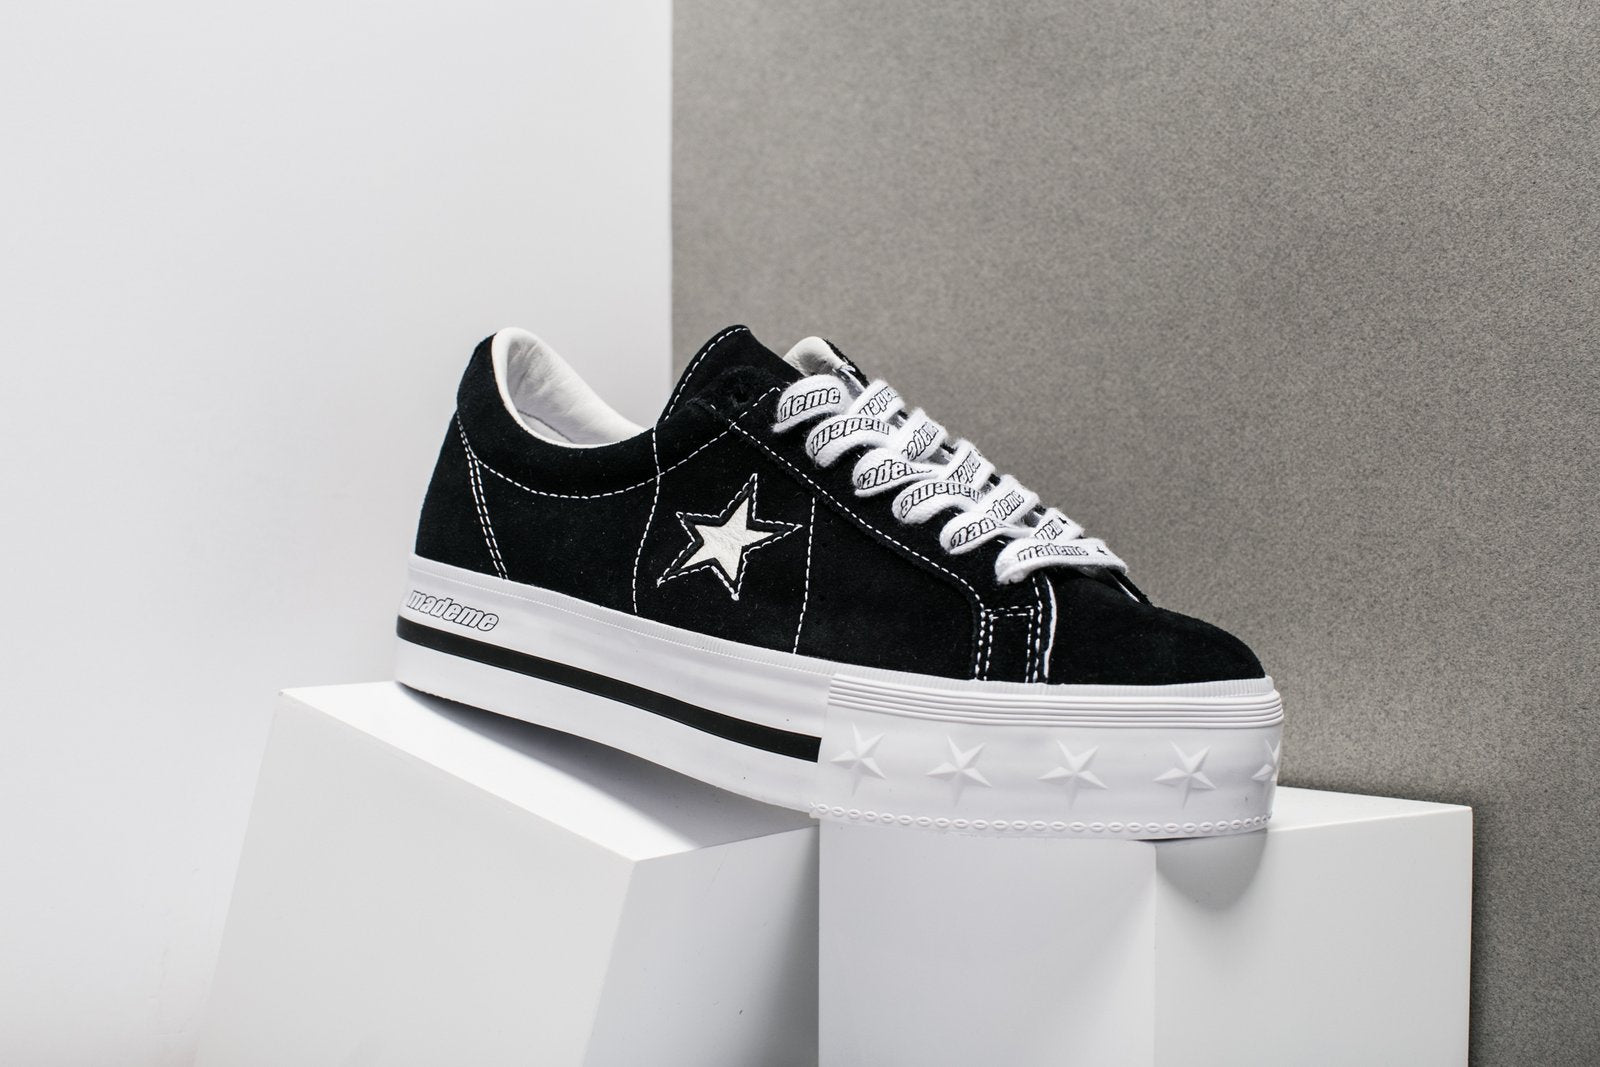 converse x mademe one star sneaker